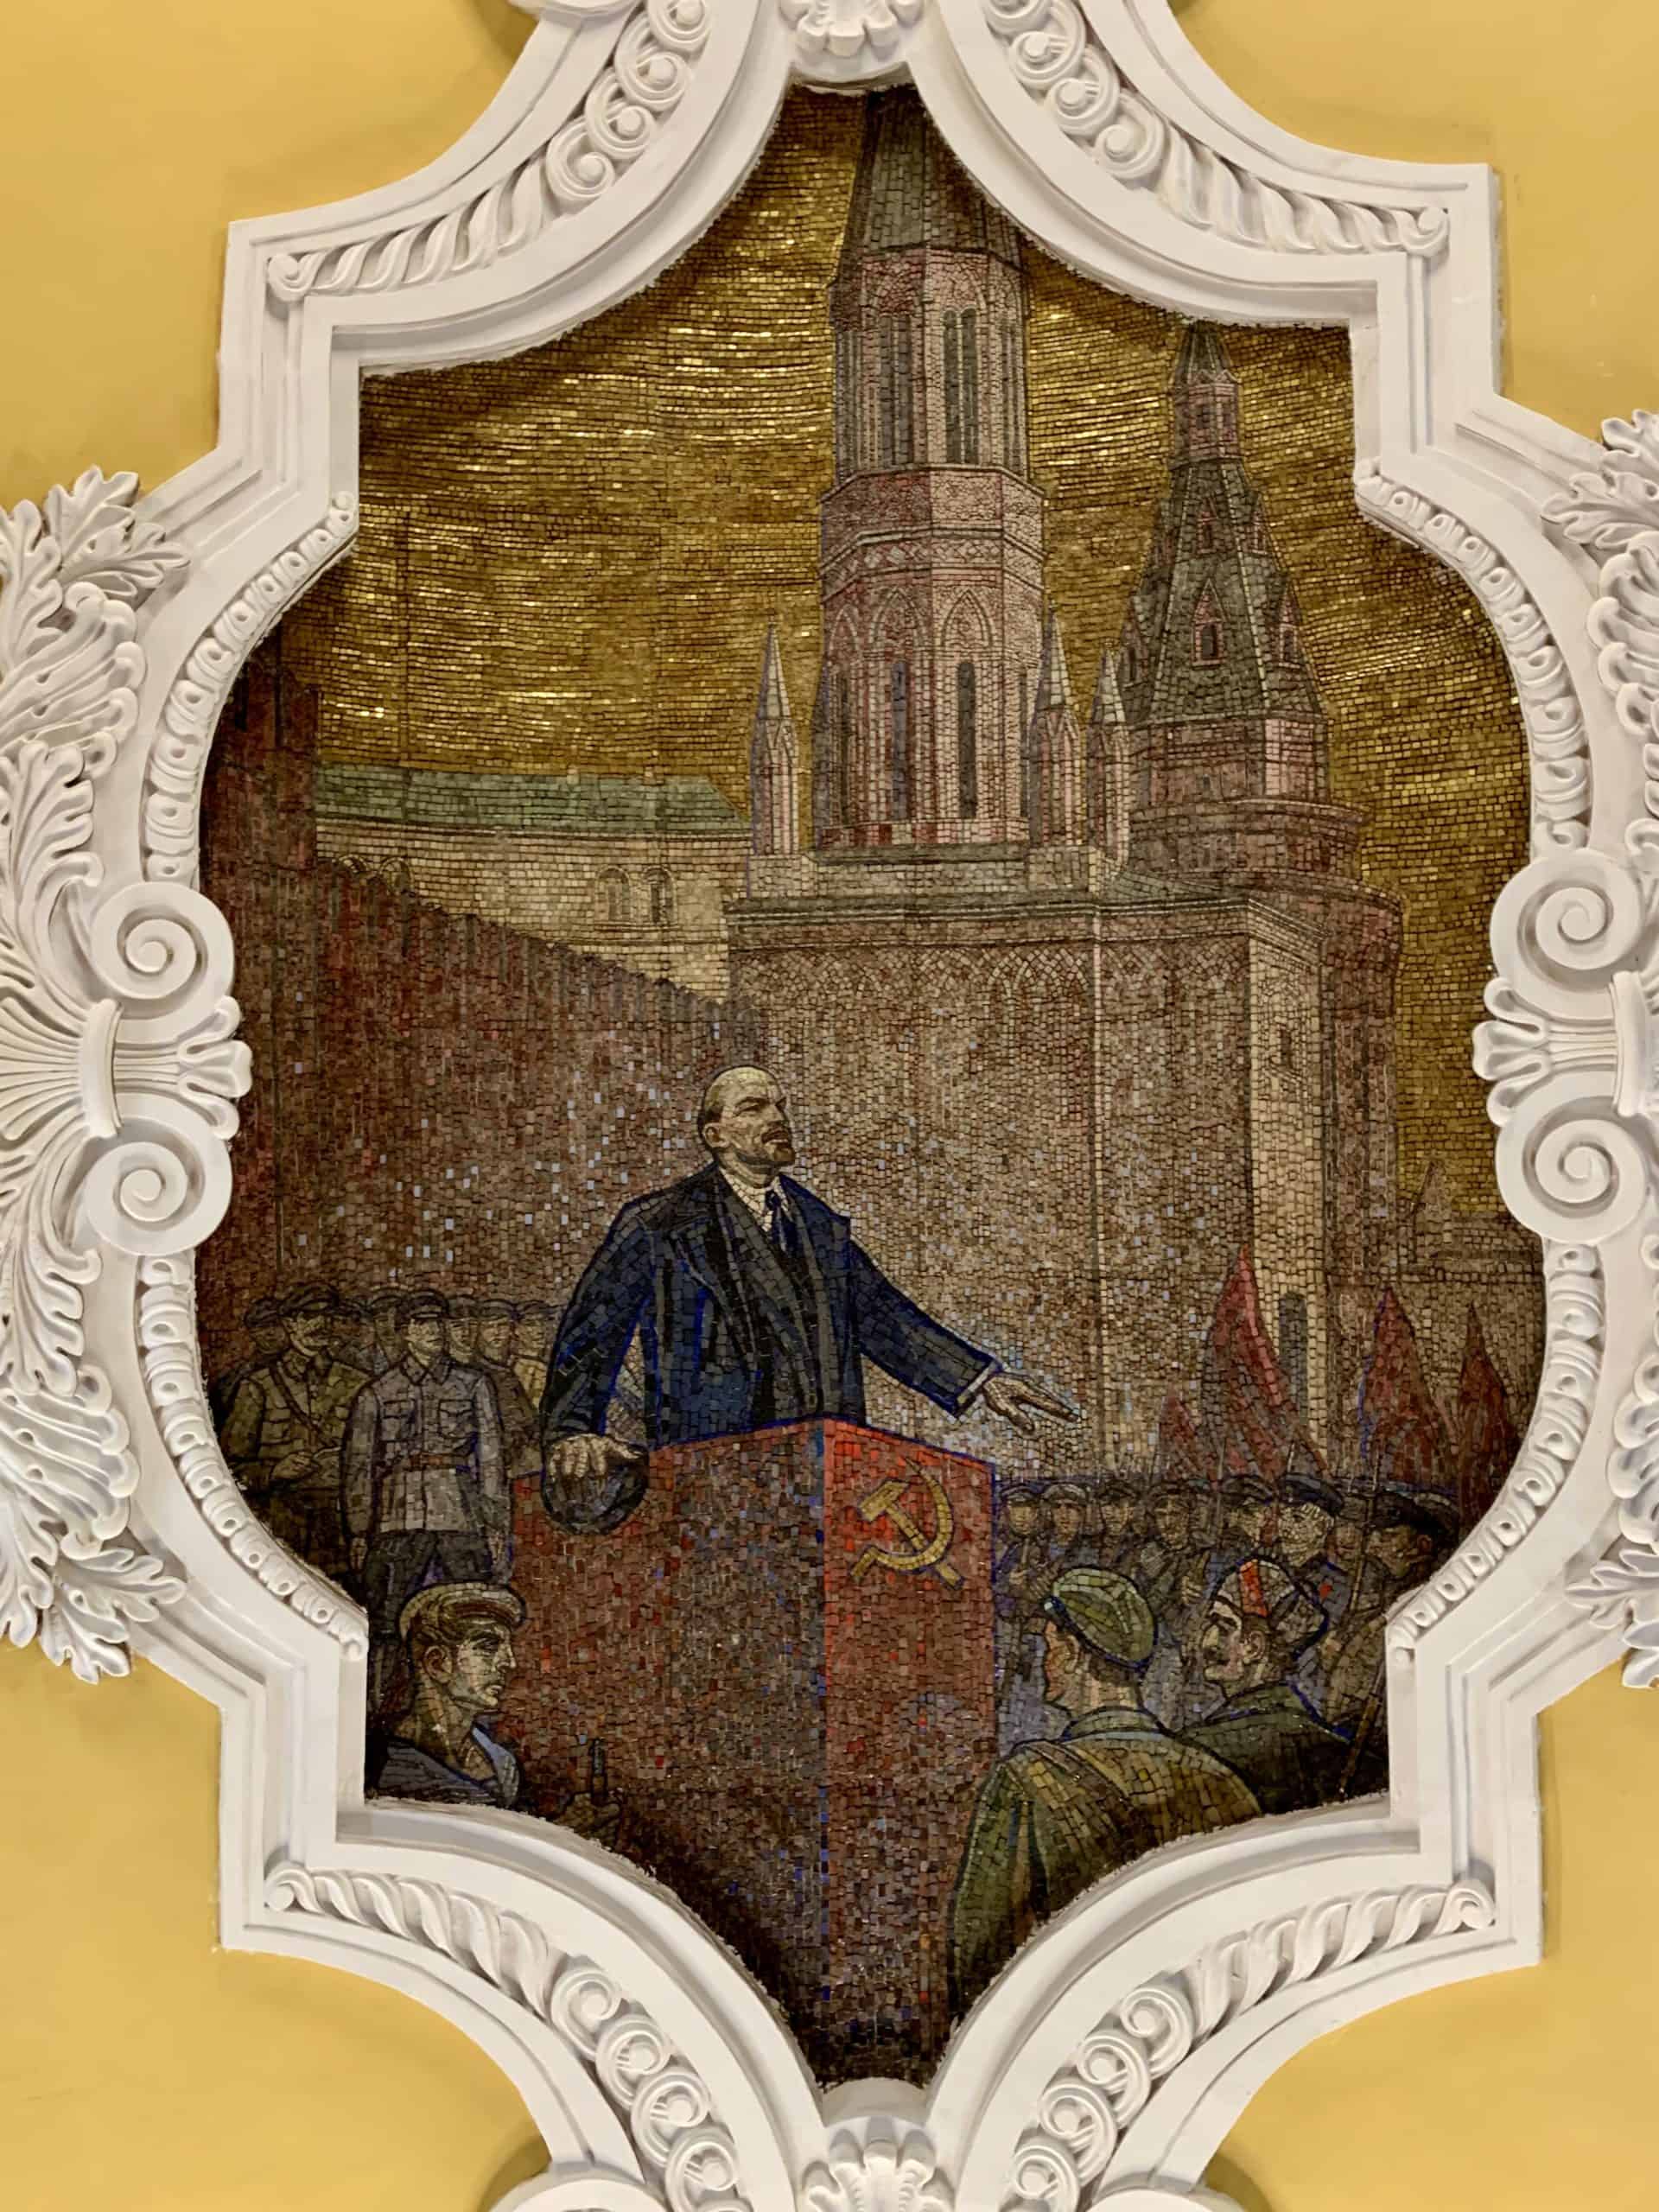 Vladimir Lenin mosaic at the moscow metro